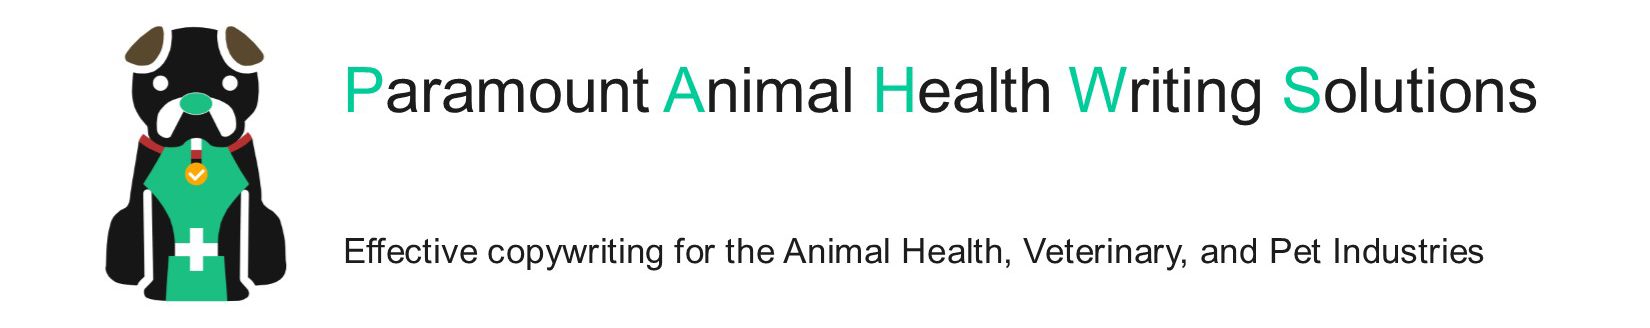 Paramount Animal Health Writing Solutions